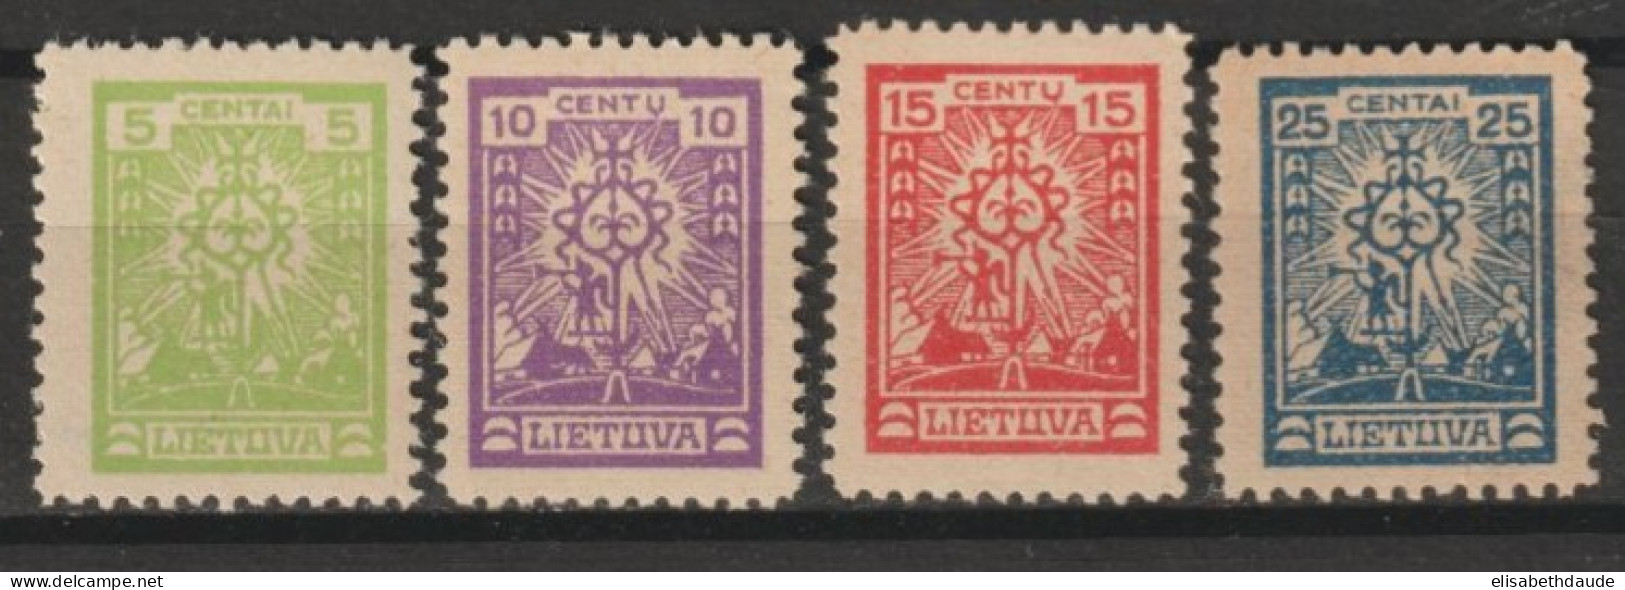 1923 - LITUANIE - SERIE COMPLETE  N°185/187 * MLH SANS FILIGRANE - COTE = 30 EUR. - Lithuania